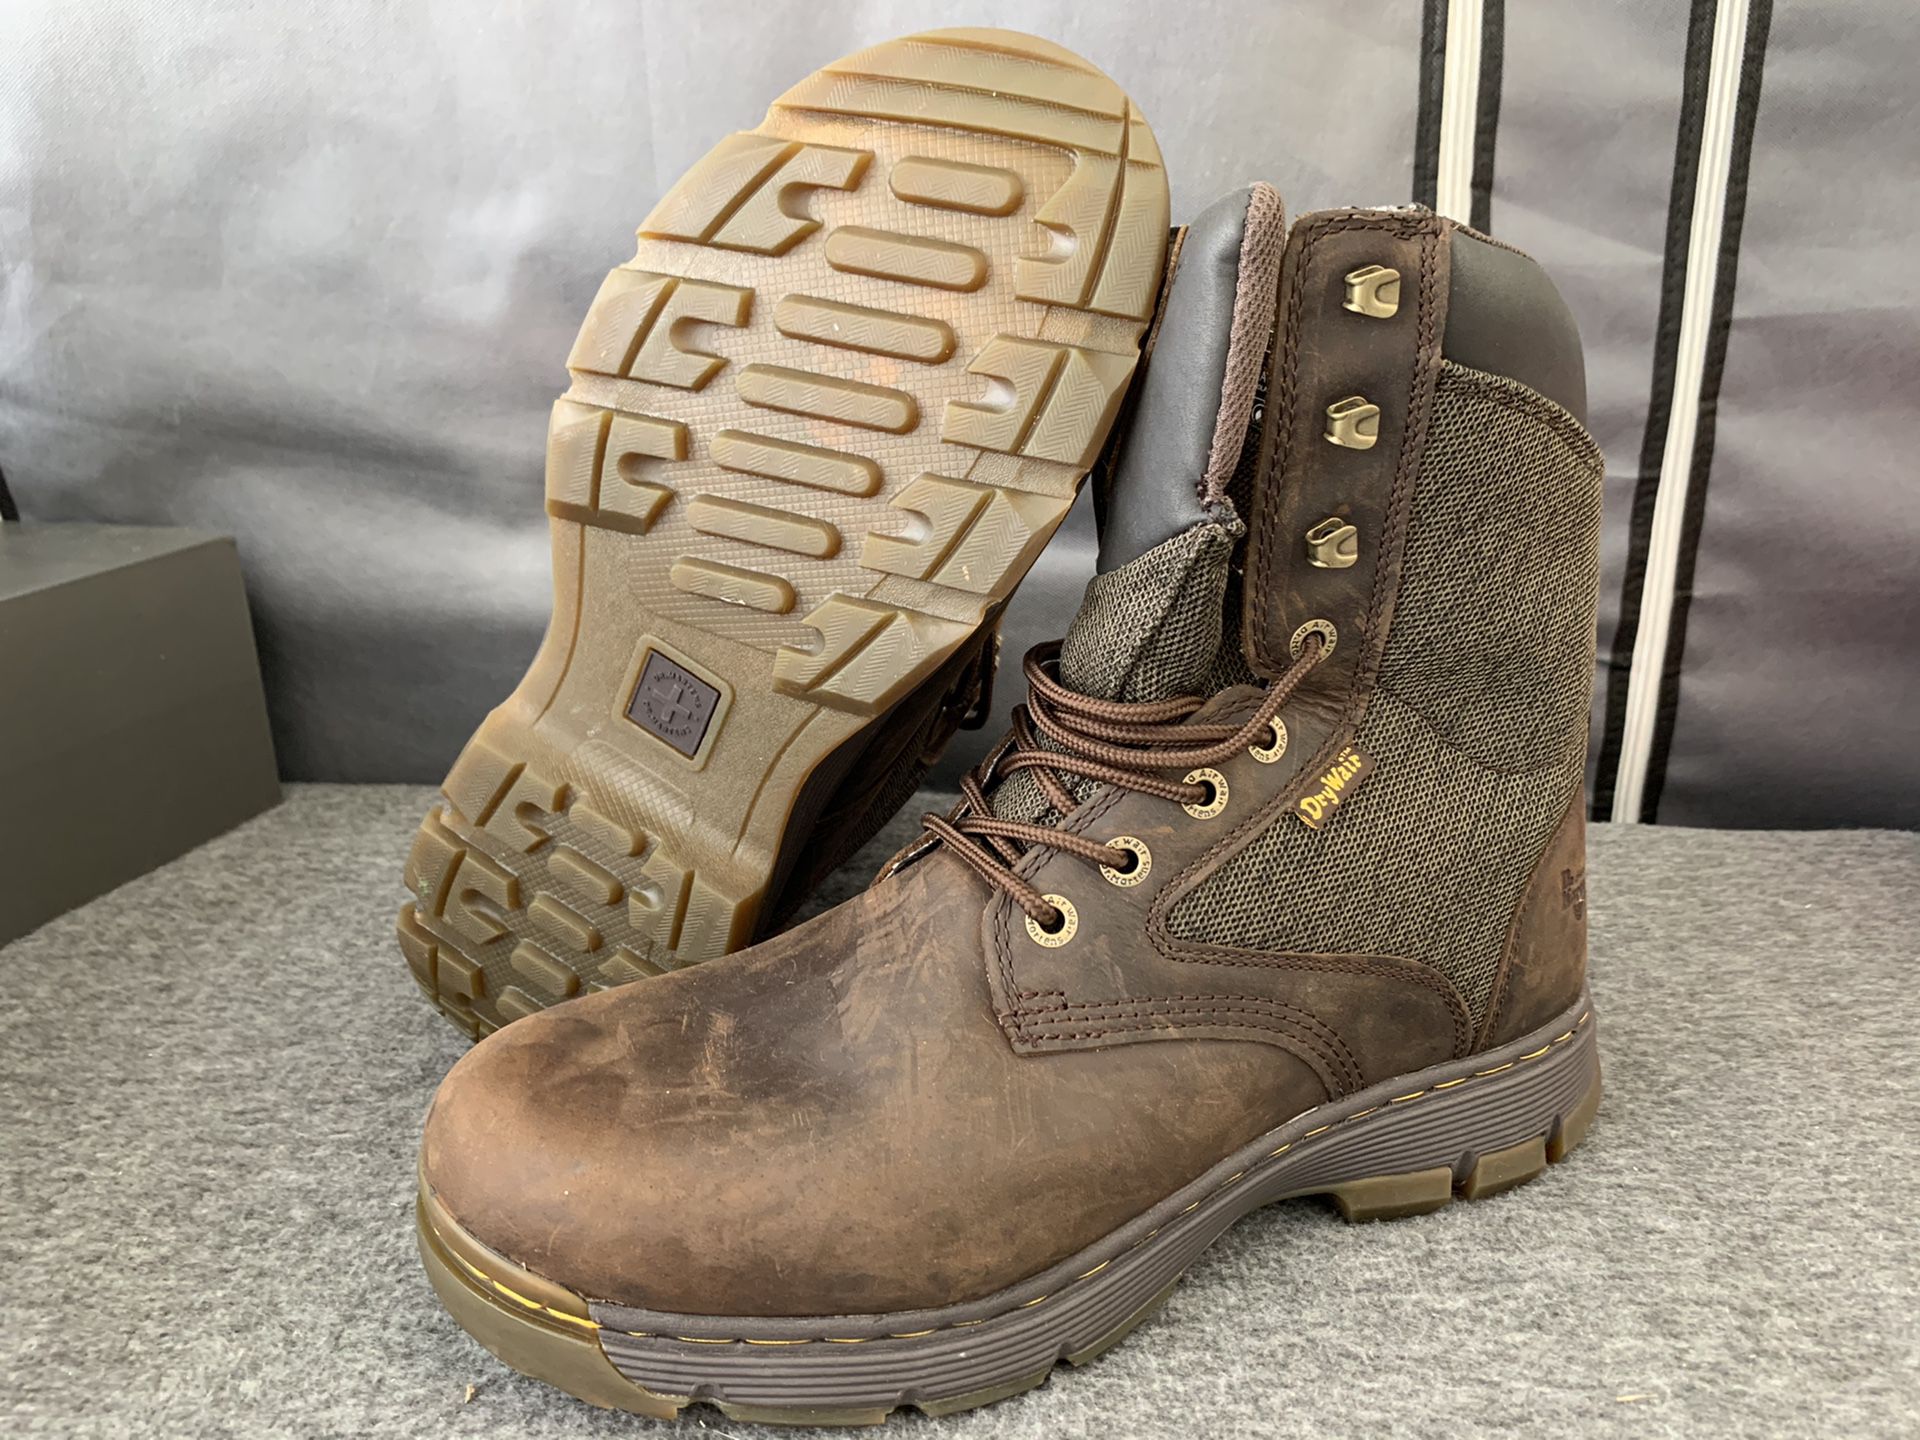 Dr Martens Airware Softwair Work Boots Botas De Trabajo Men’s Size 13 D Medium NO STEEL TOE BRAND NEW